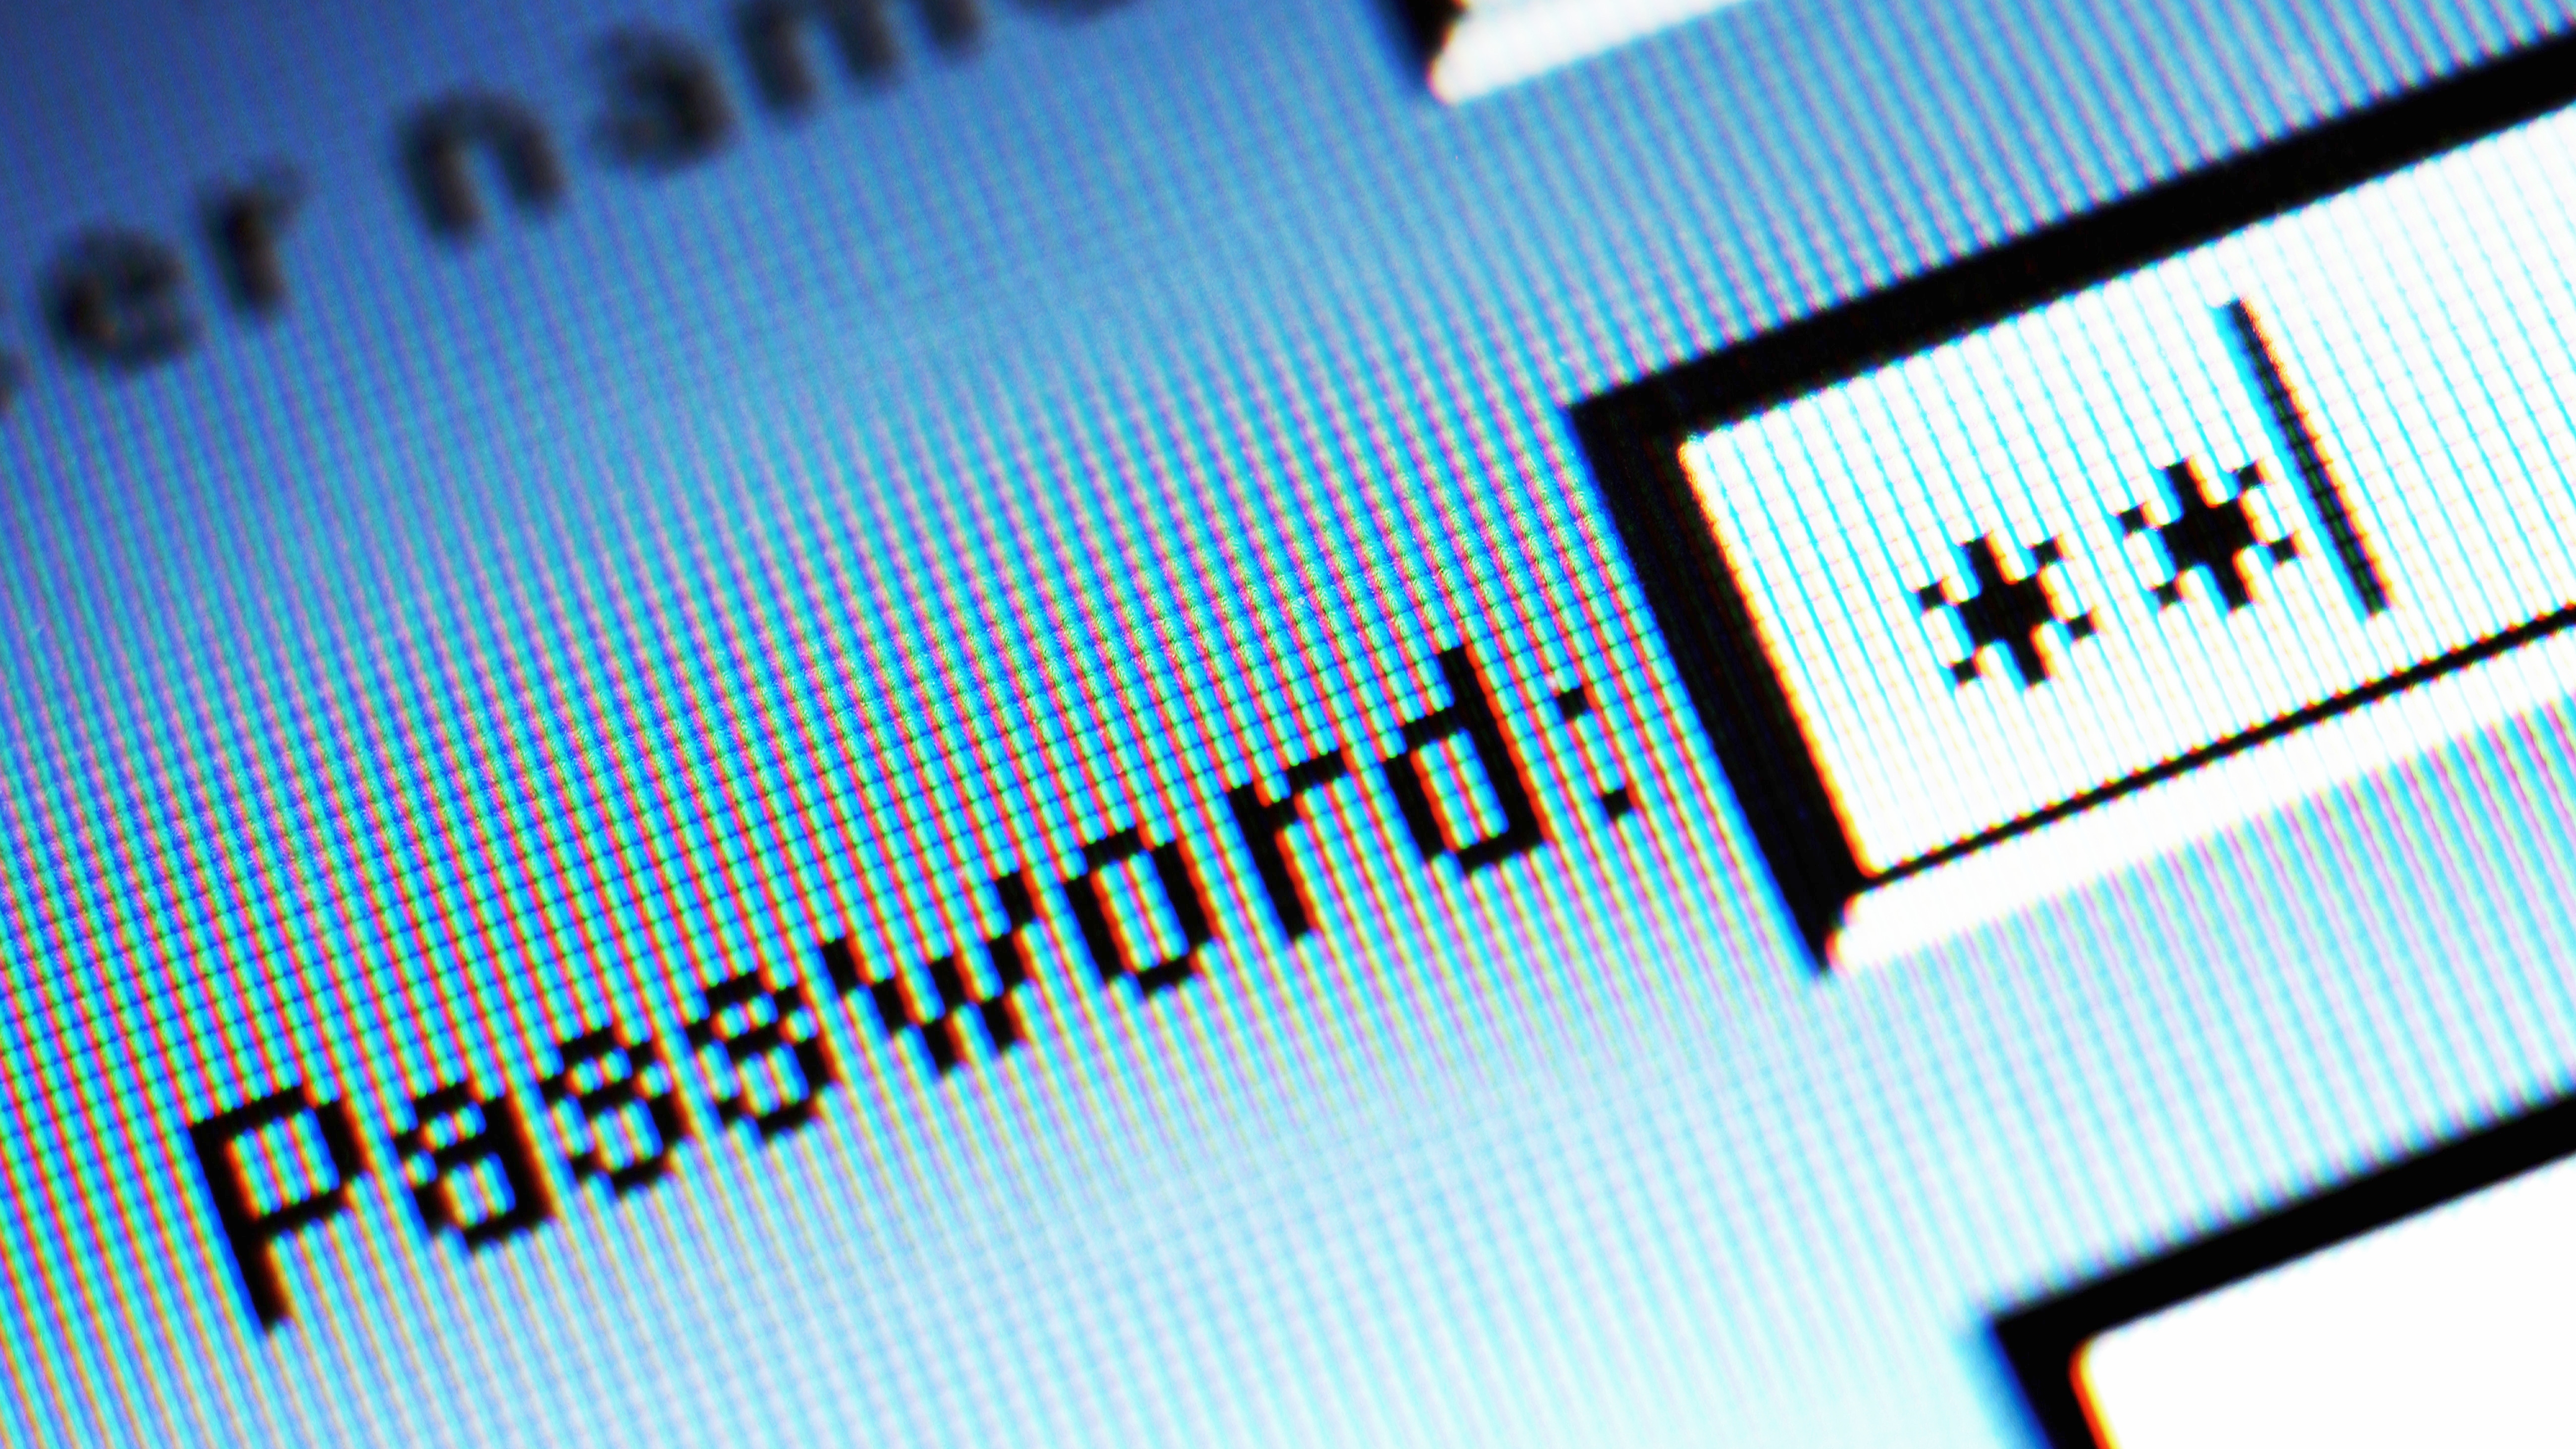 Password field on computer screen, detail